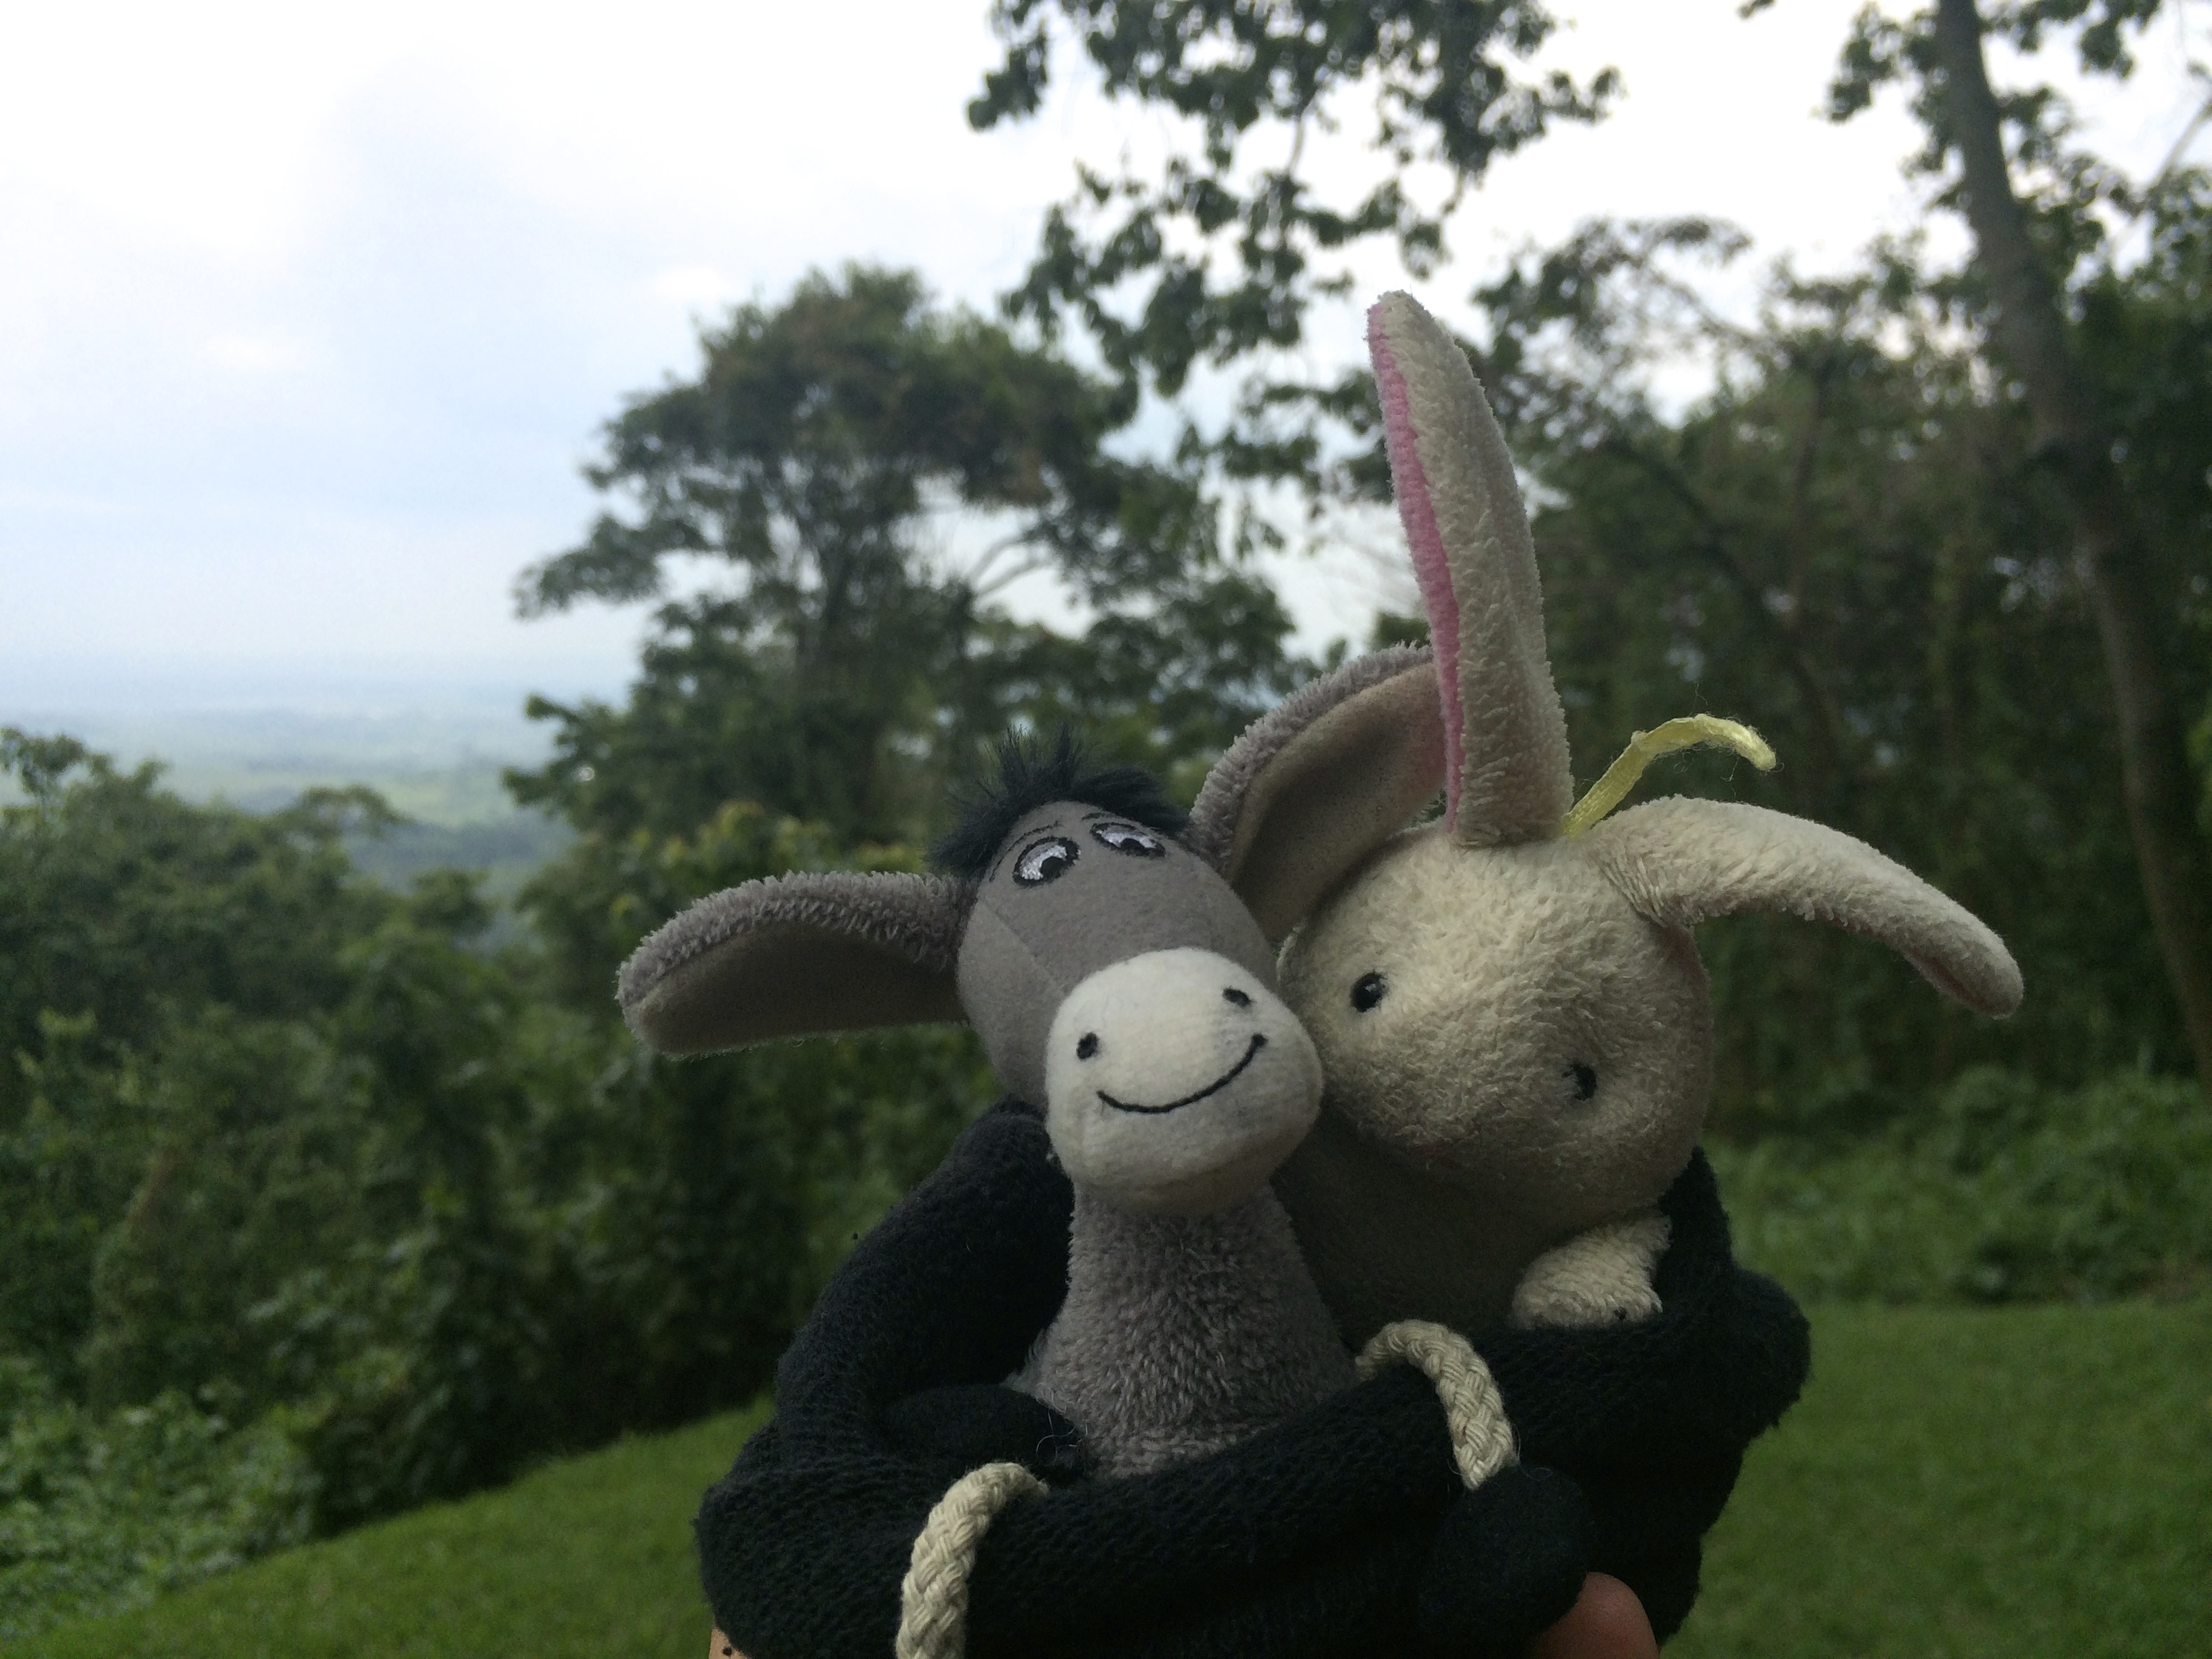 The Donkey and the Rabbit in Virunga!